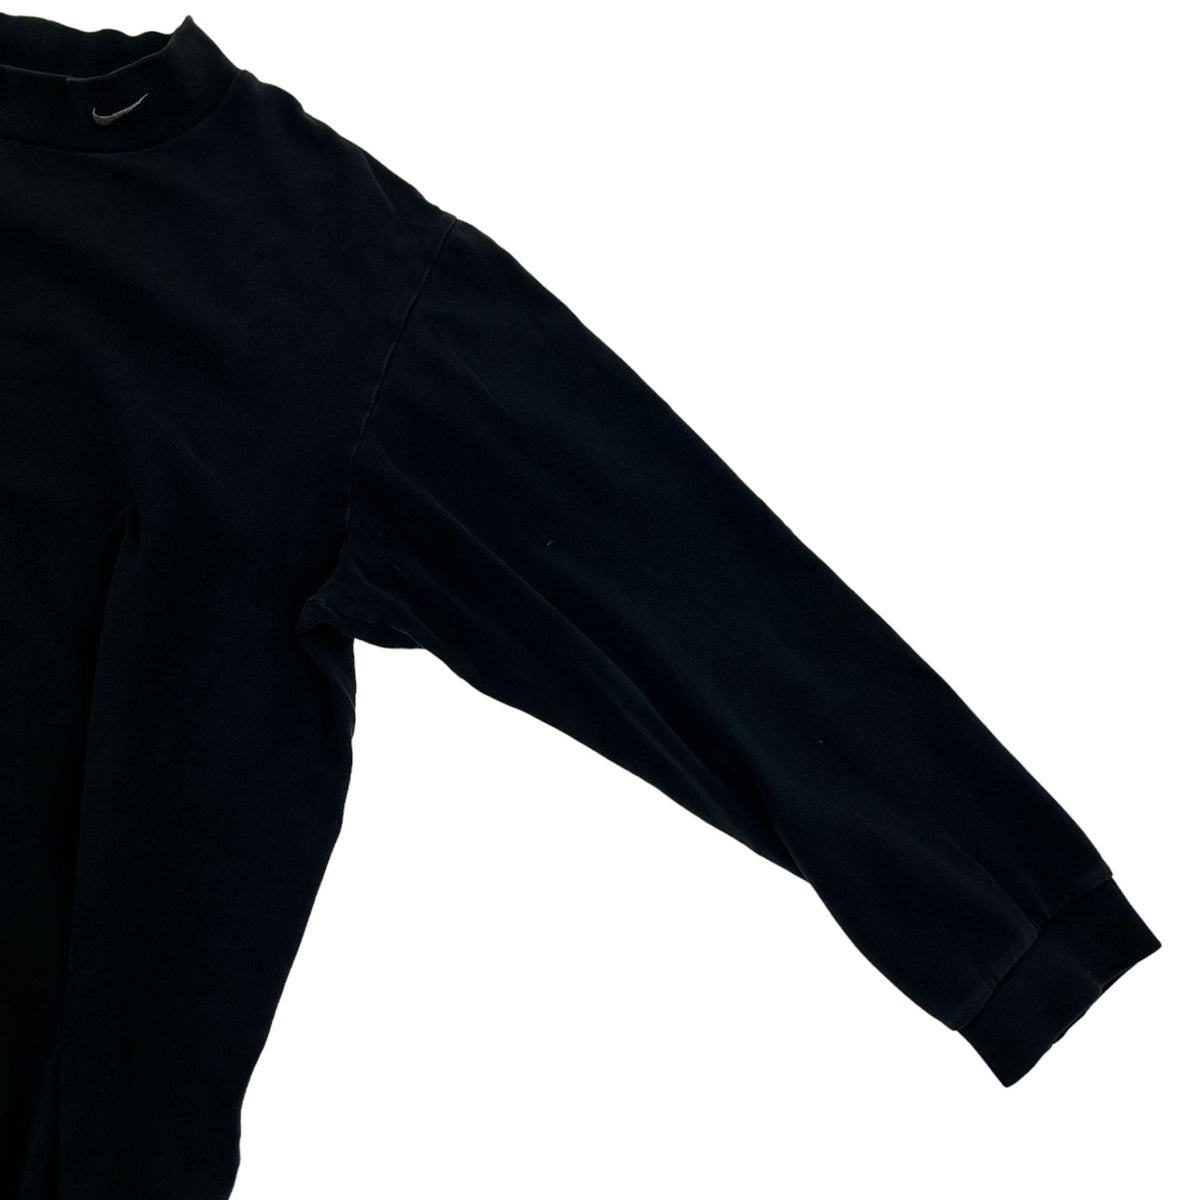 Vintage Nike Mock Neck Swoosh Long Sleeve T-Shirt Size S